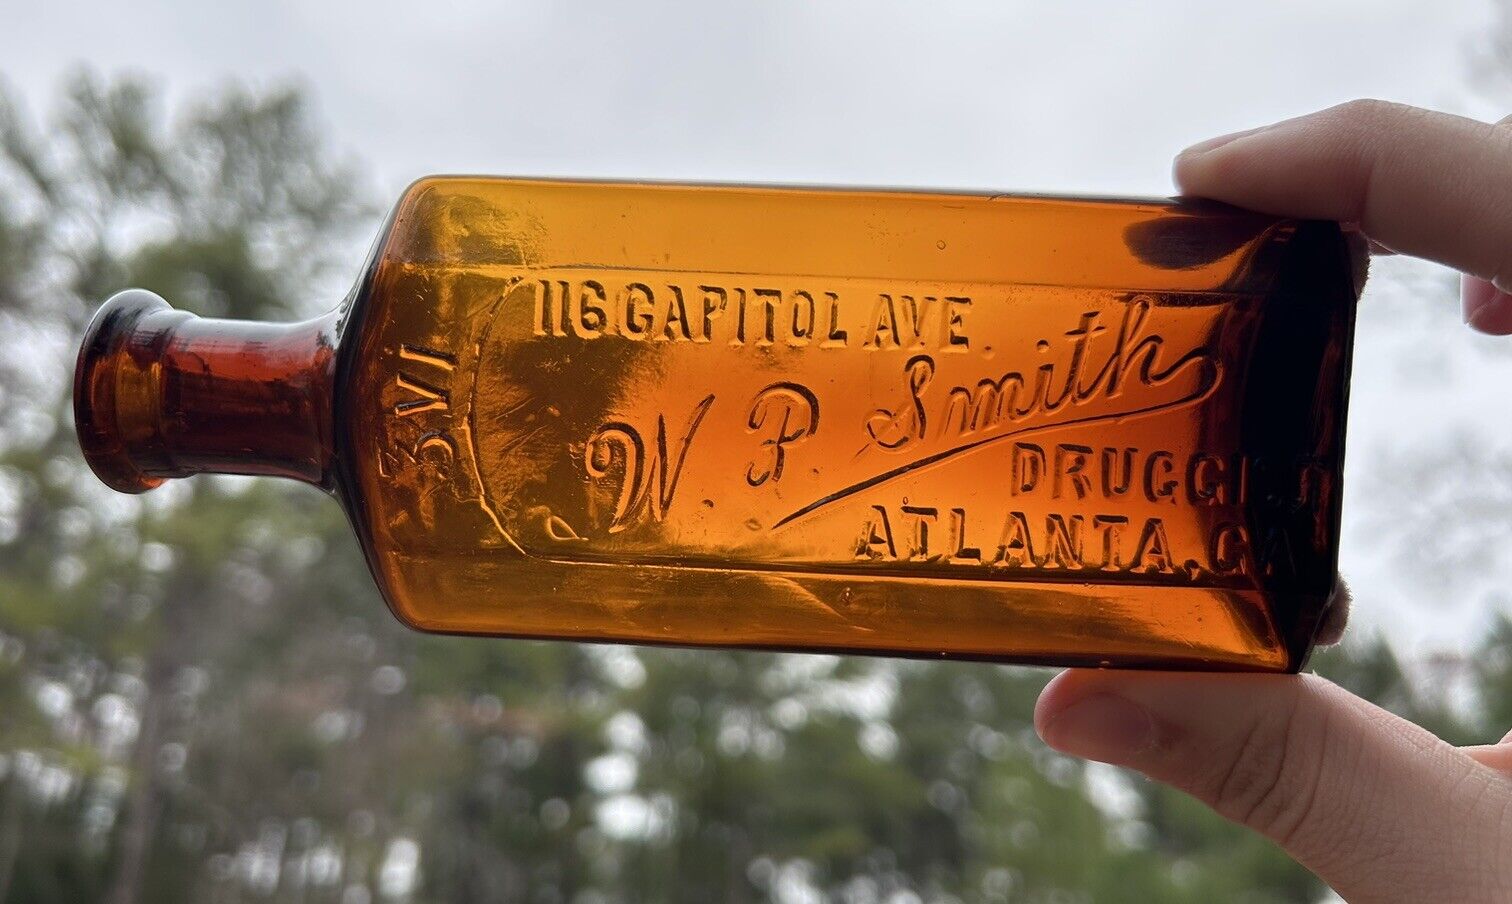 Antique W.P. SMITH - DRUGGIST - ATLANTA, GEORGIA amber colored drugstore bottle